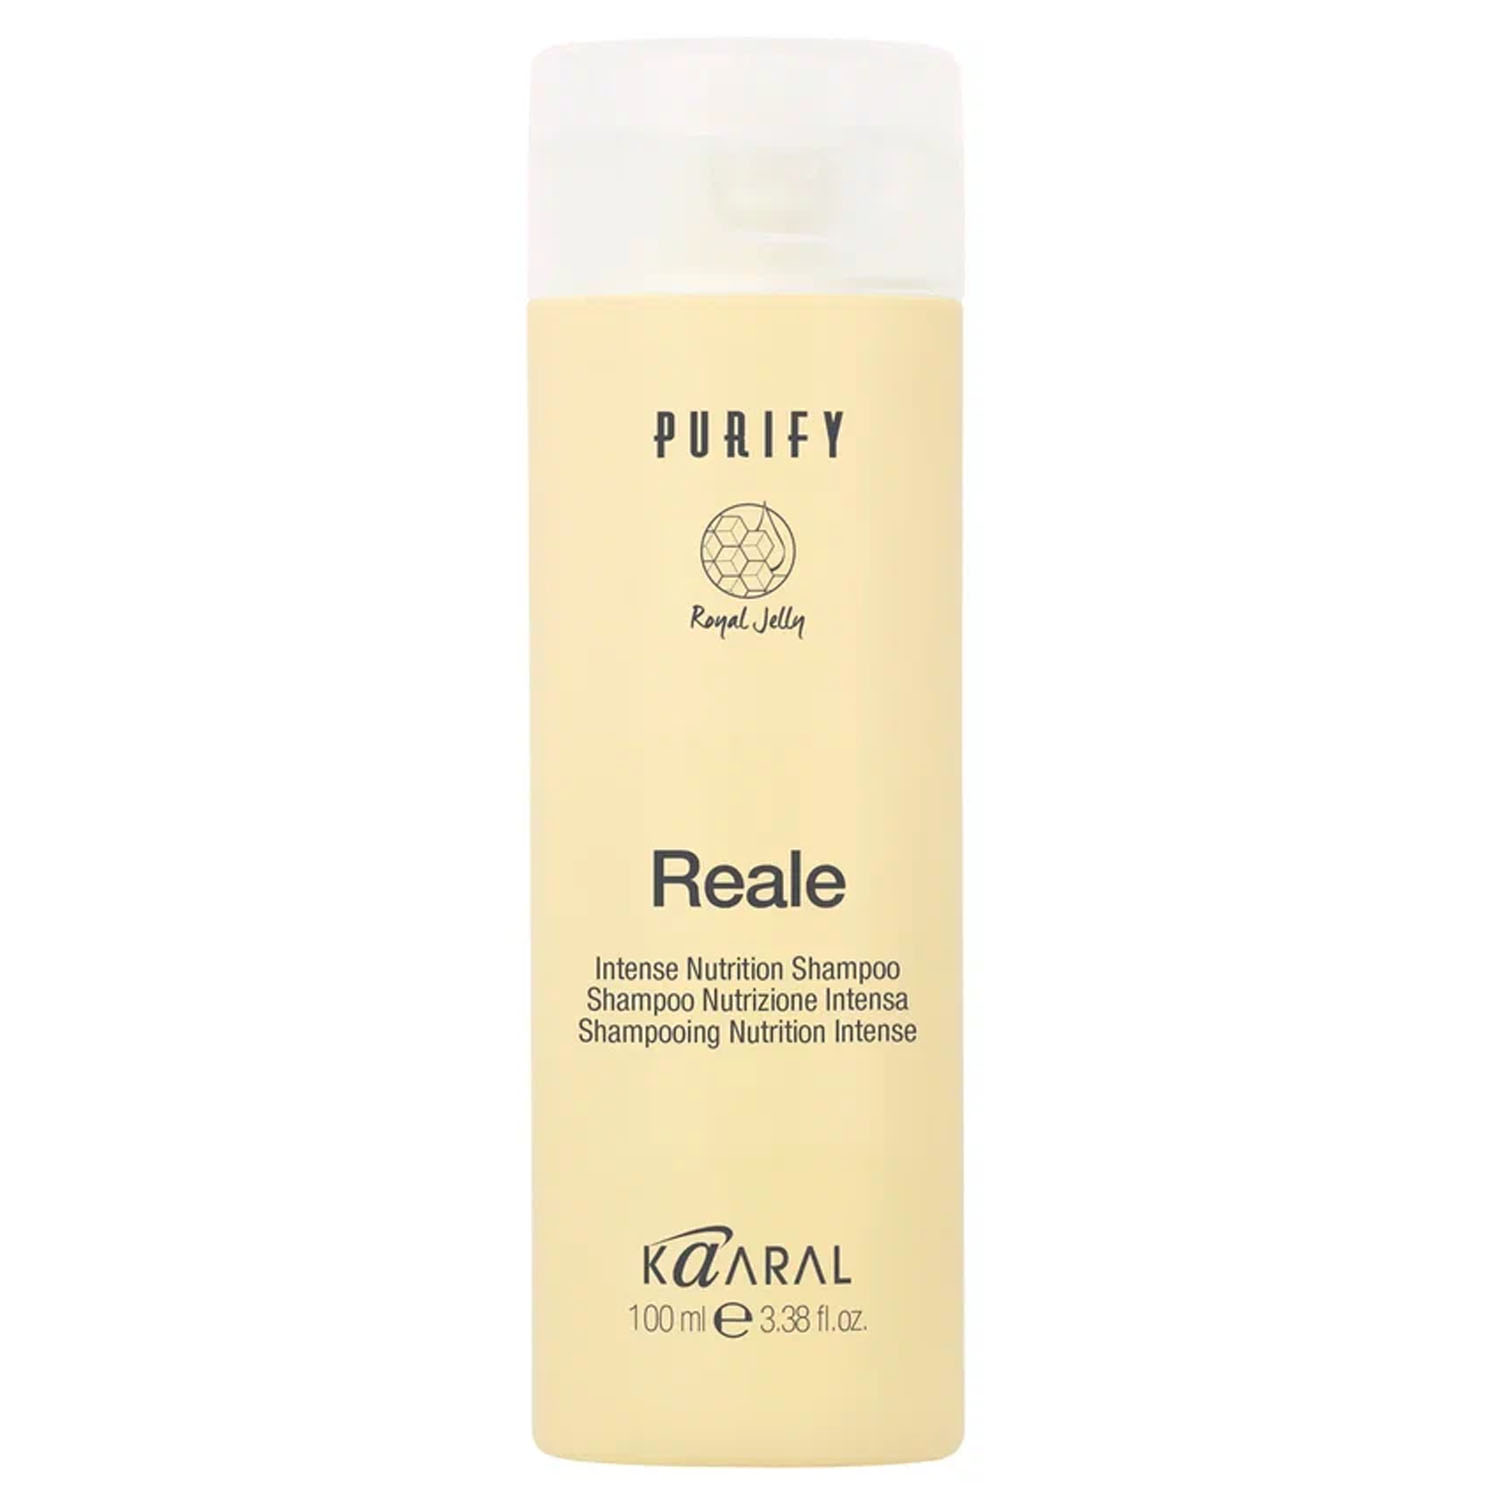 цена Kaaral Восстанавливающий шампунь для поврежденных волос Reale Intense Nutrition Shampoo, 100 мл (Kaaral, Purify)